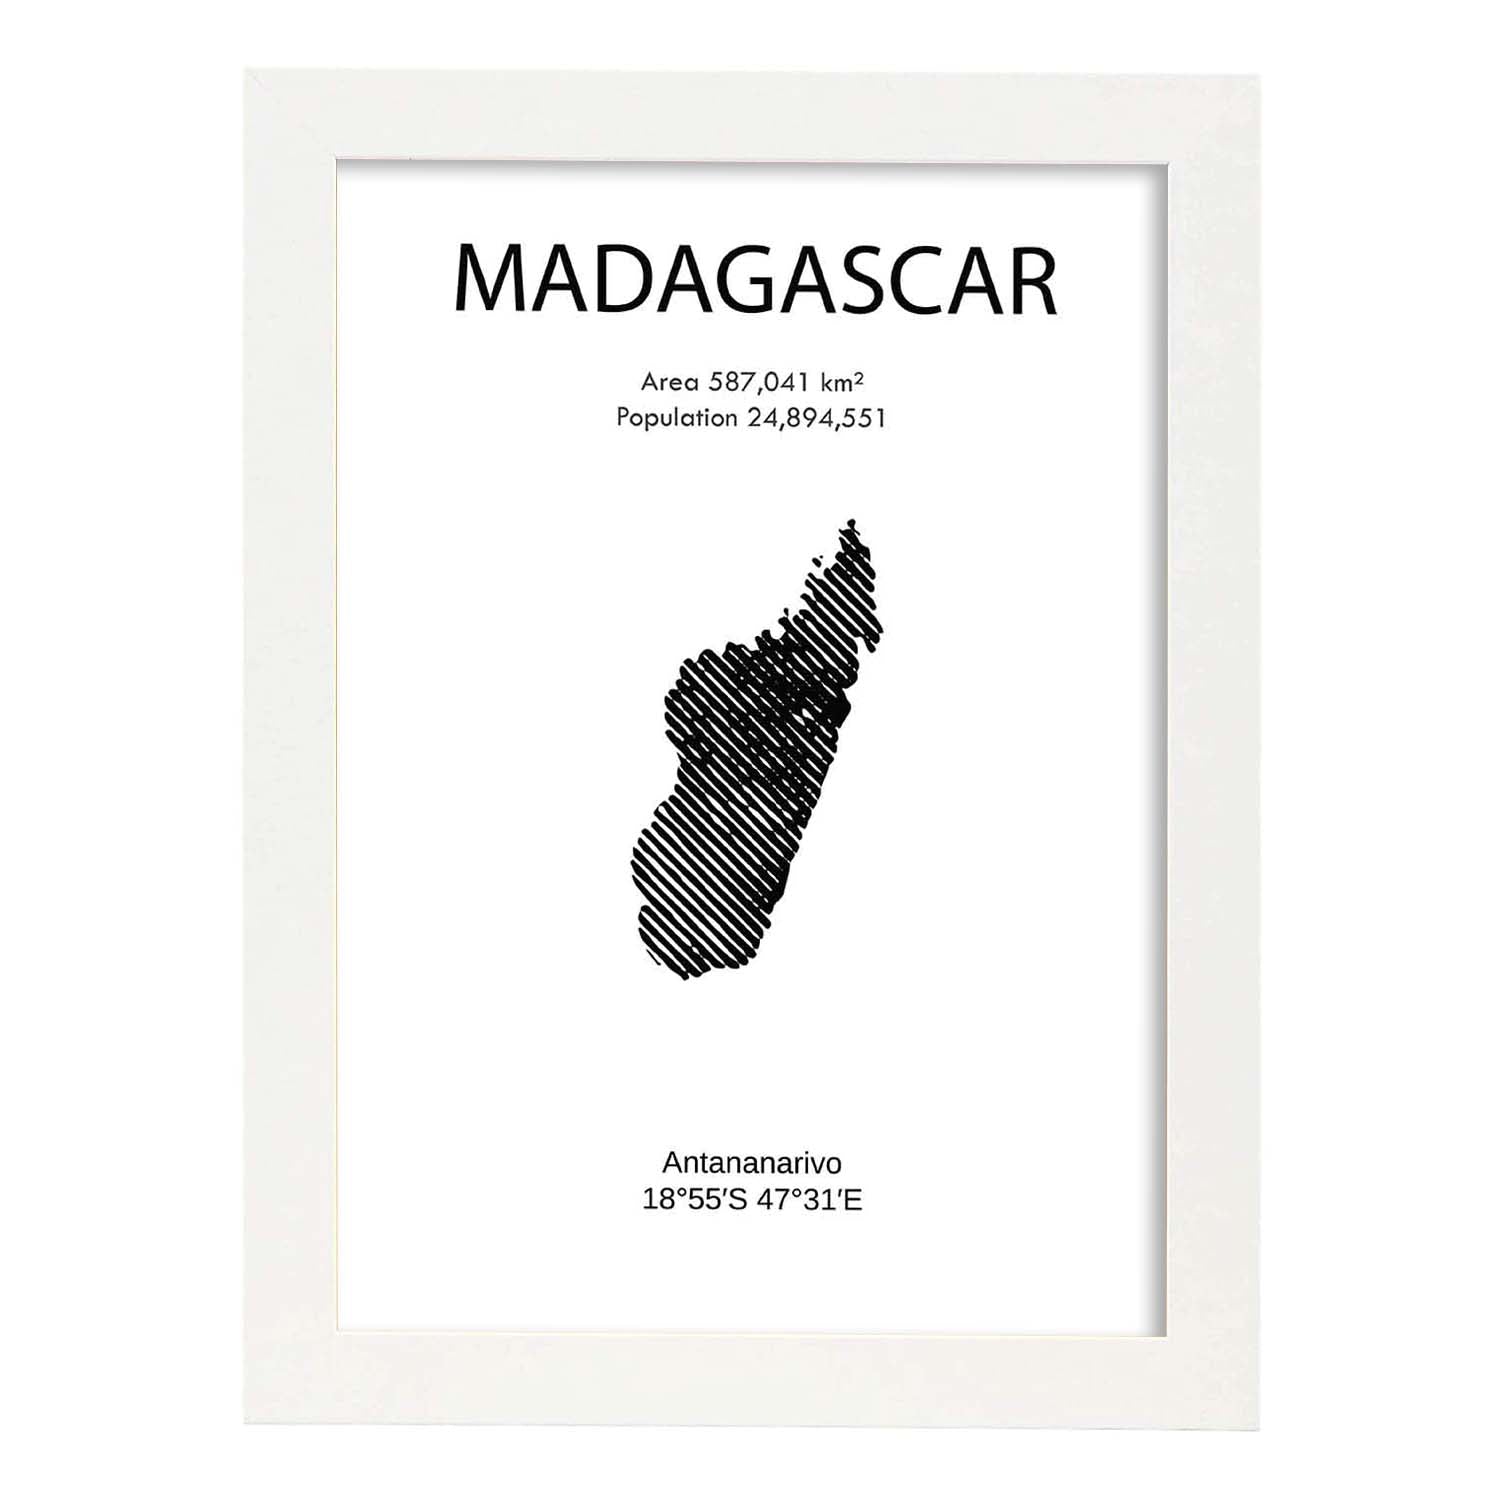 Poster de Madagascar. Láminas de paises y continentes del mundo.-Artwork-Nacnic-A4-Marco Blanco-Nacnic Estudio SL